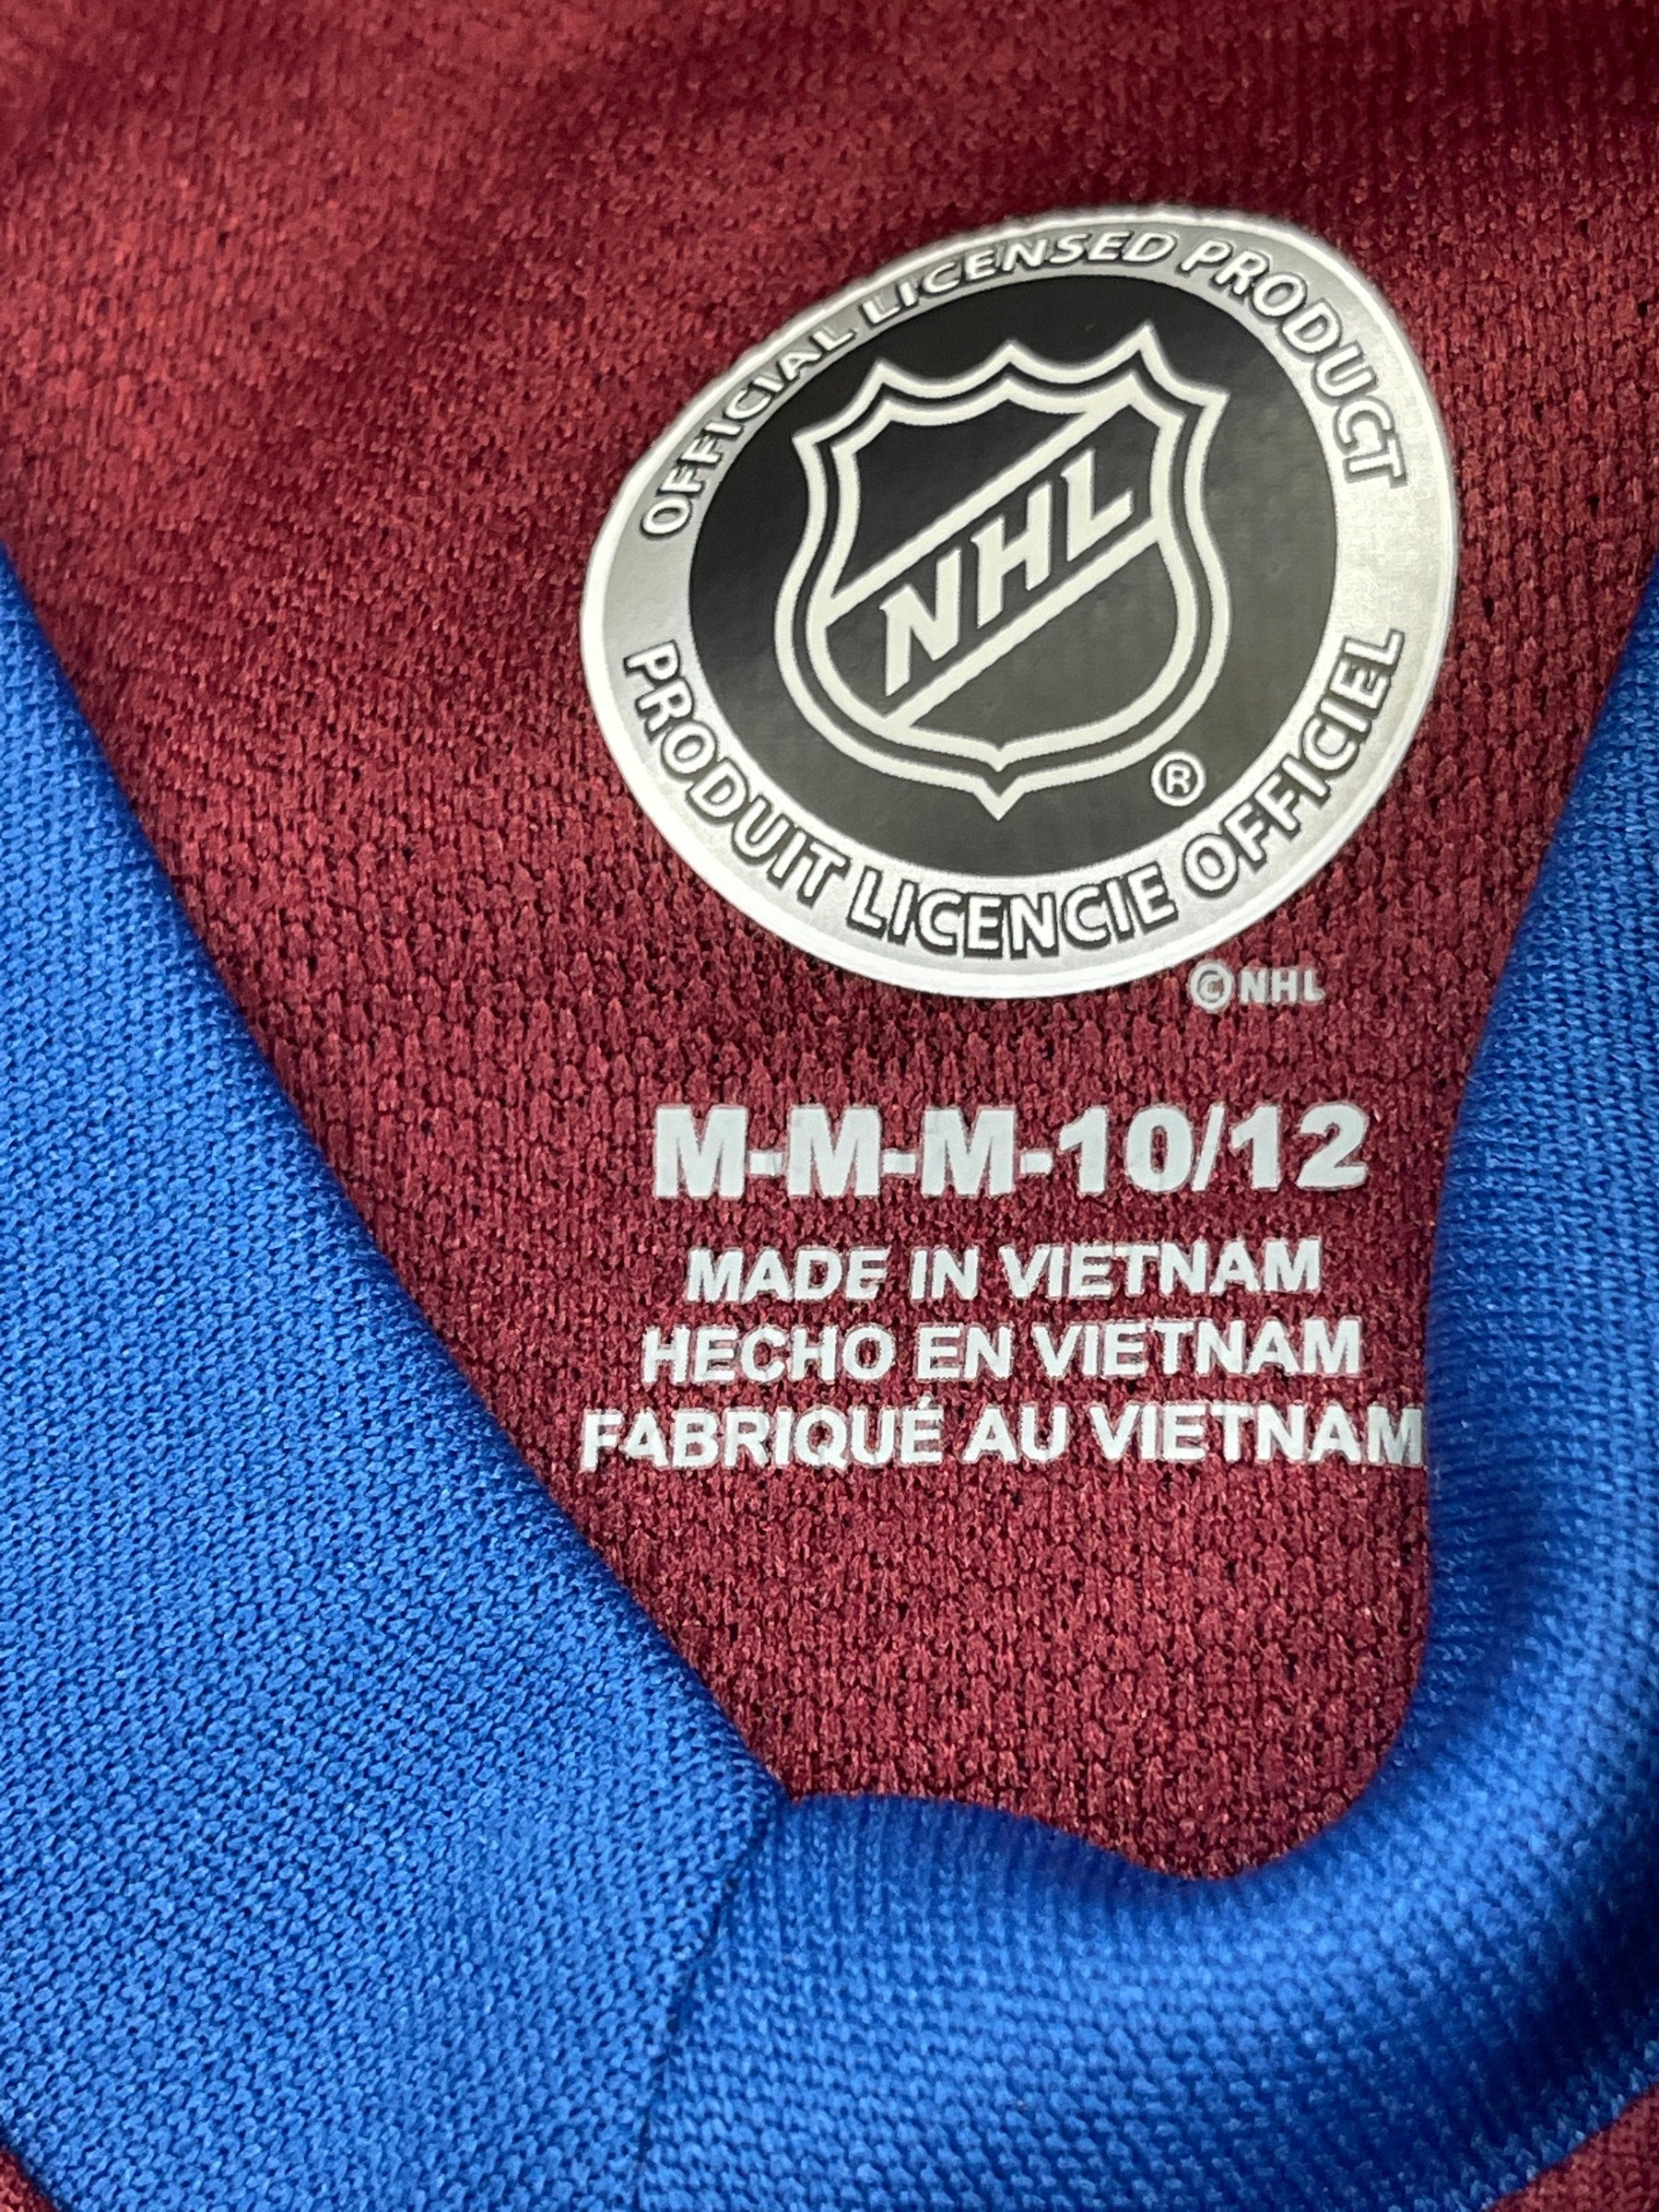 NHL Colorado Avalanche Ice Hockey Jersey Stitched Youth Medium 10-12